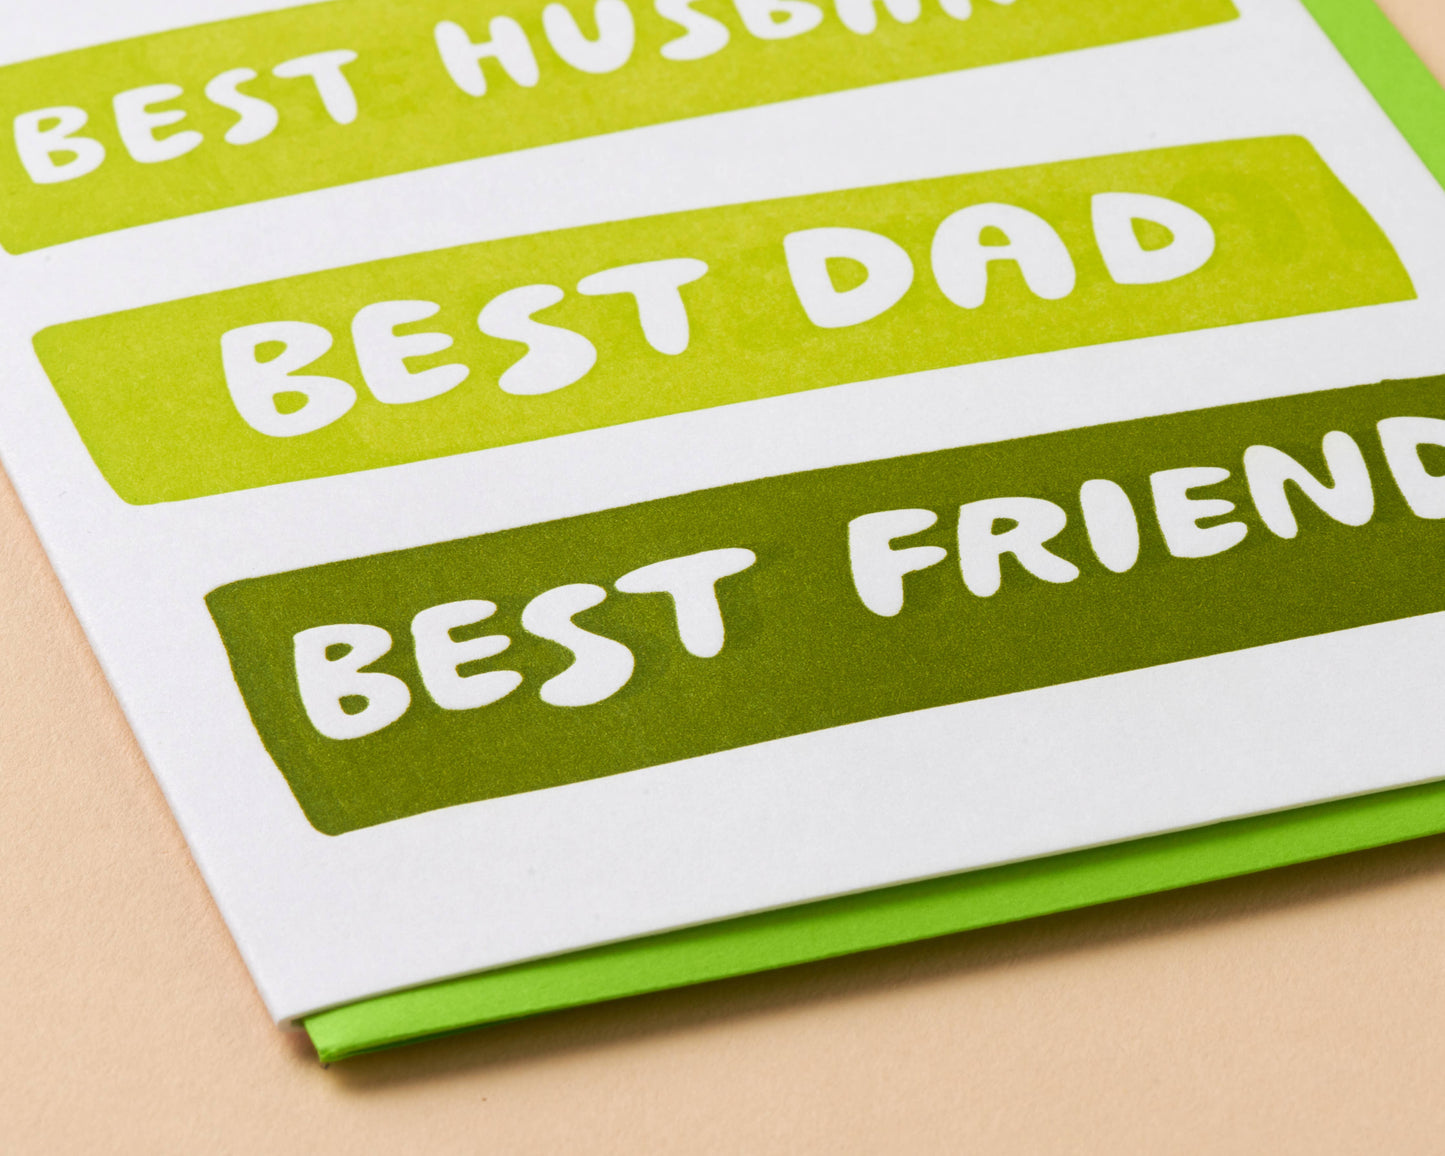 Best Husband, Dad, Friend Card